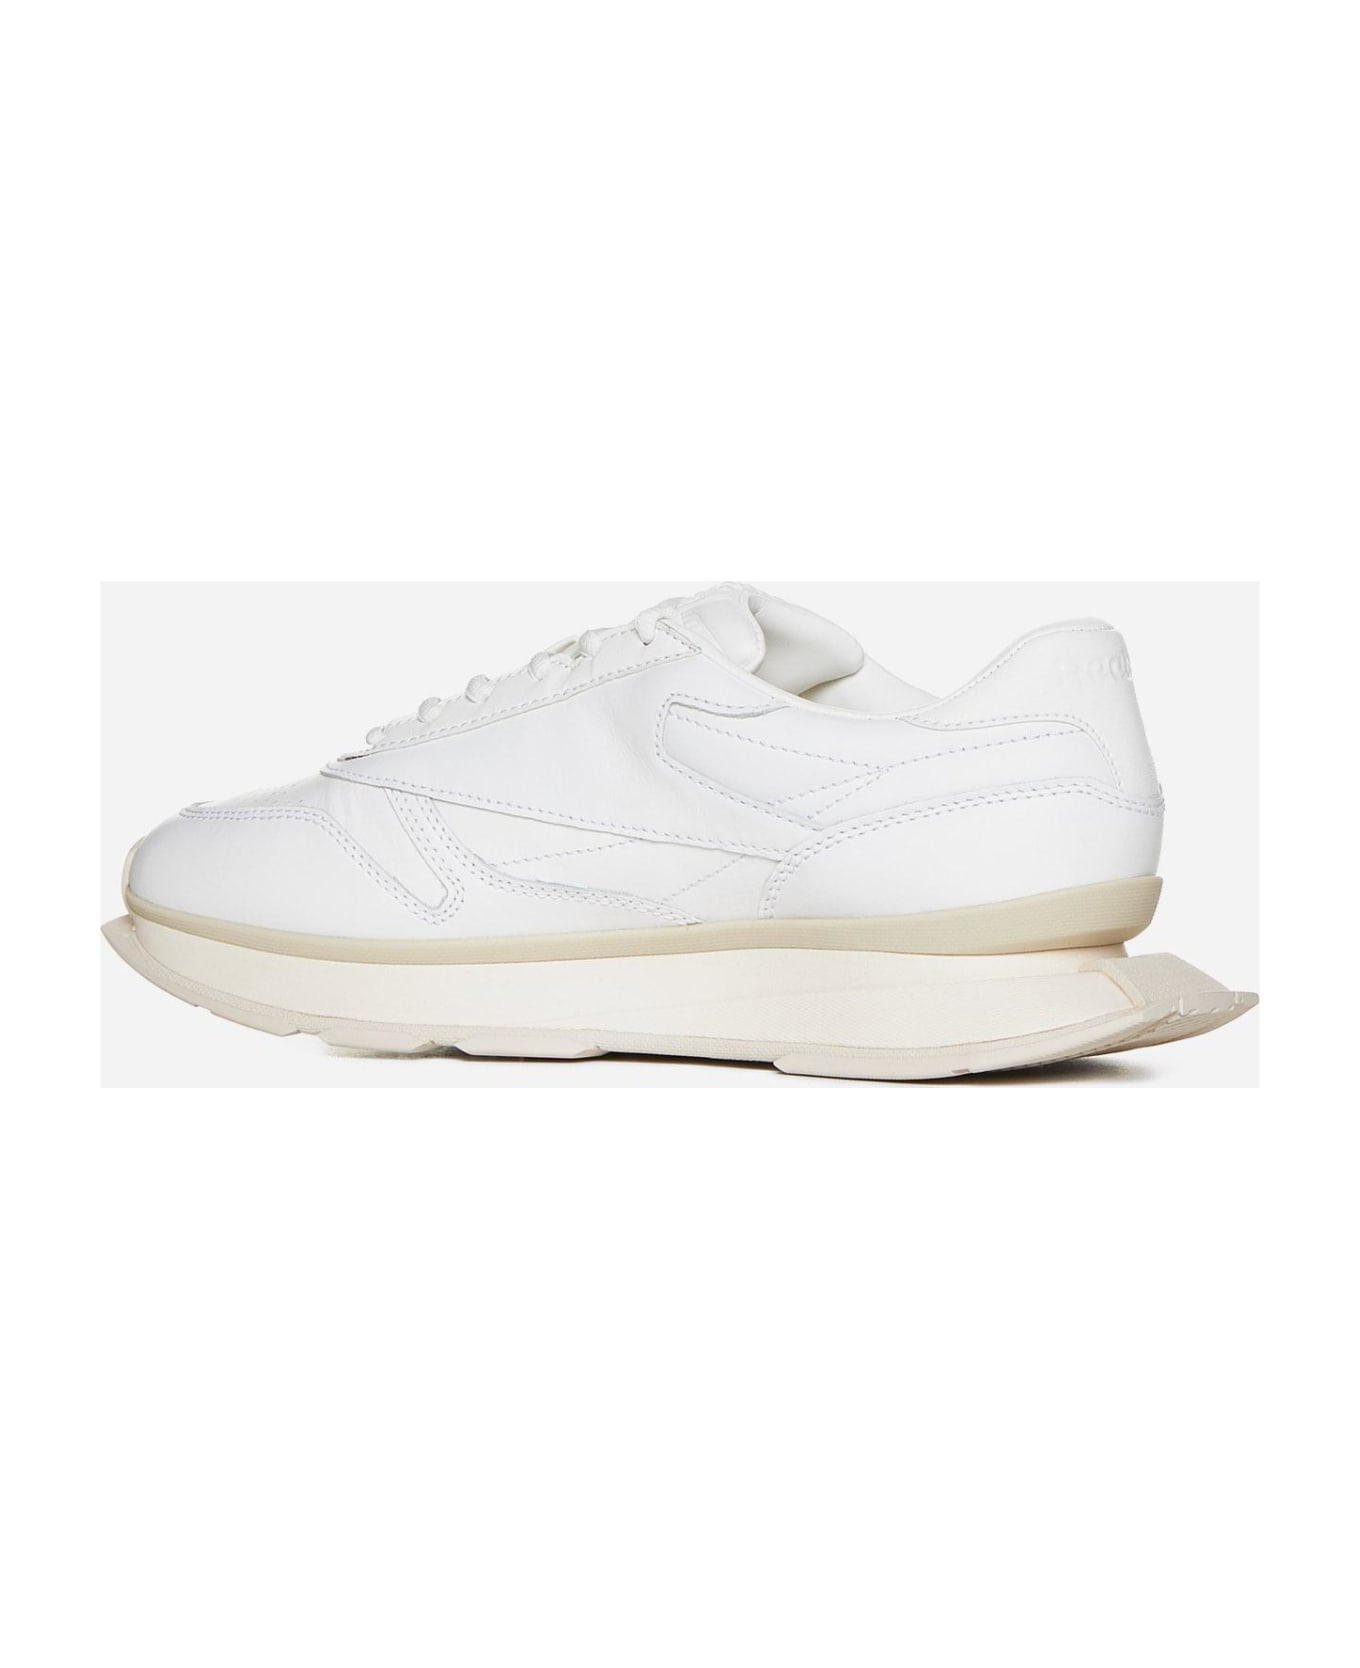 Reebok Ltd Leather Sneakers - White Lthe